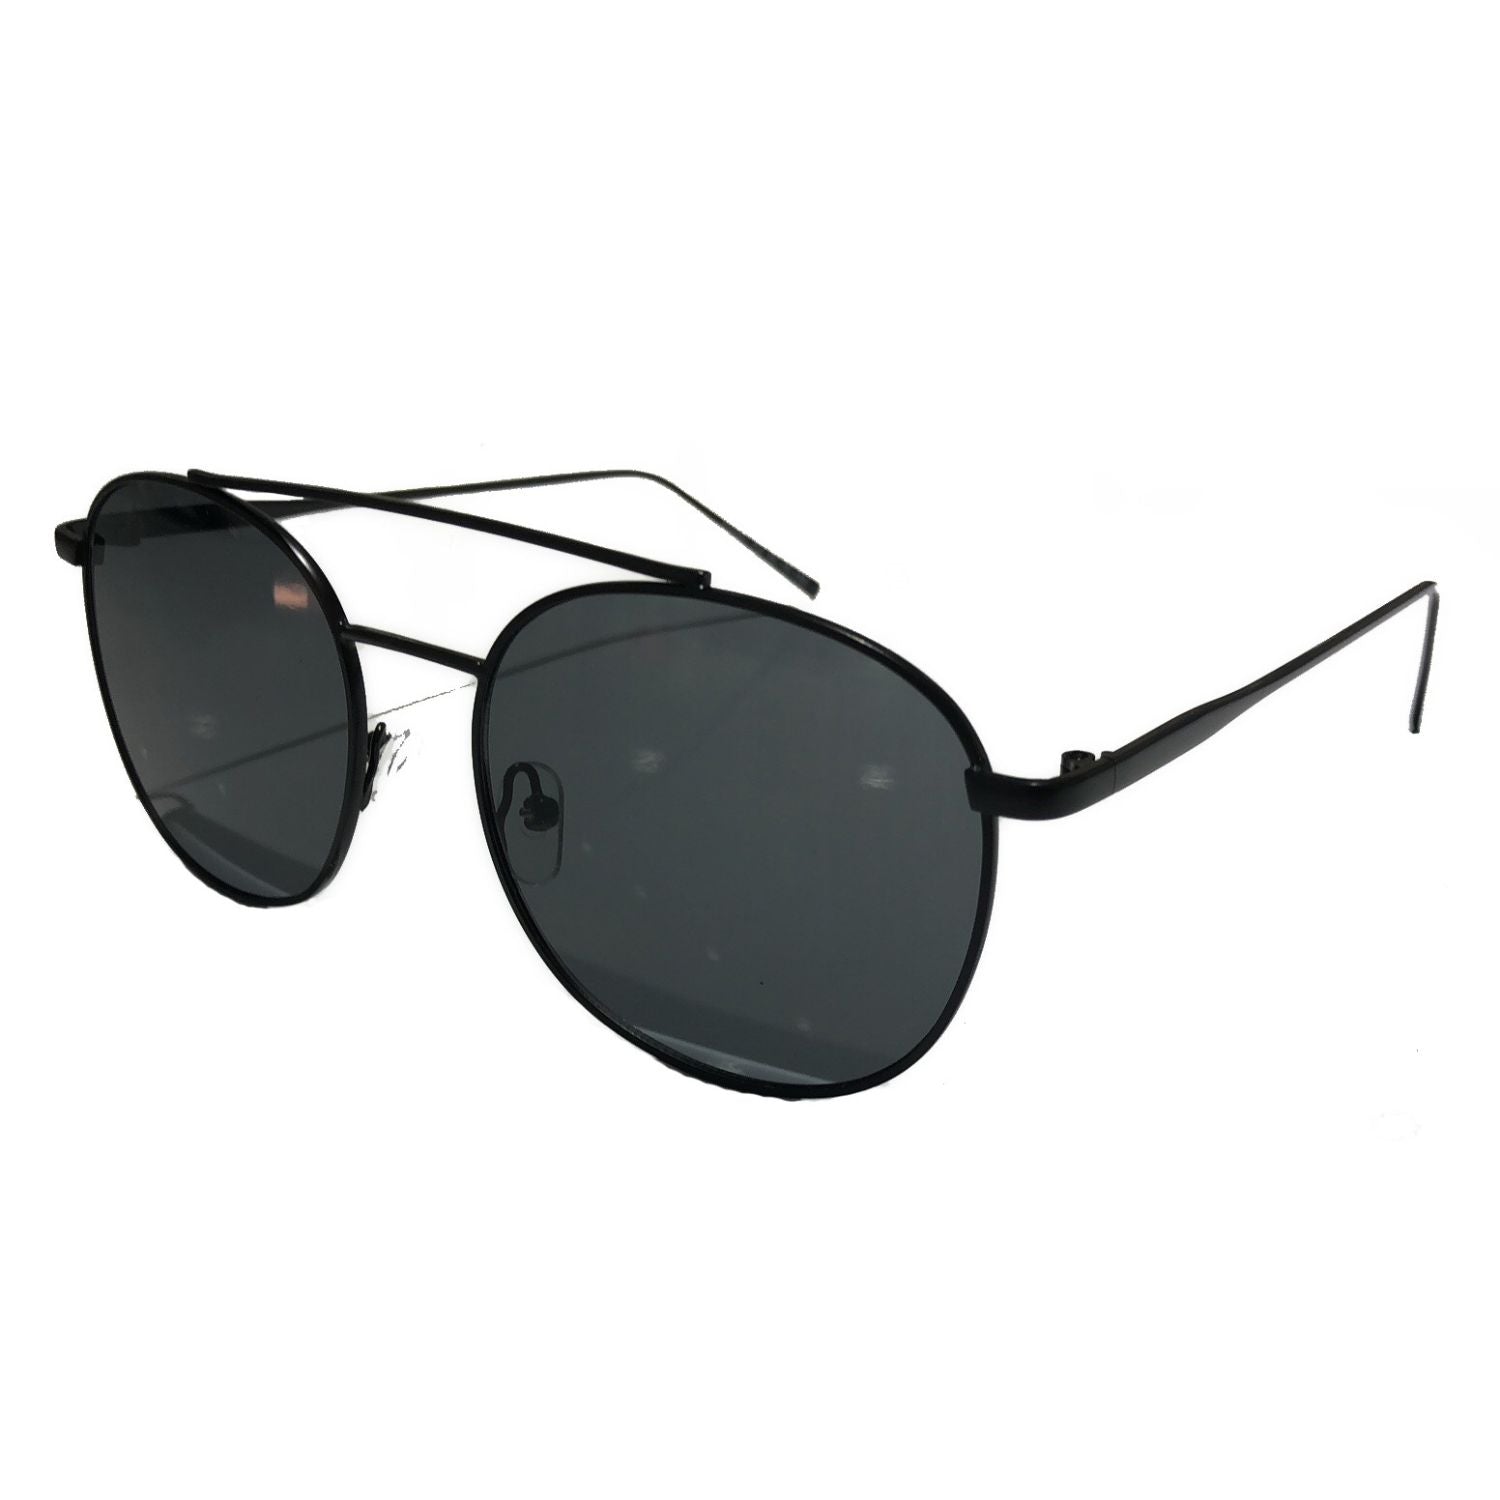 S2081 - Retro Circle Round Brow-Bar Fashion Sunglasses Black/Smoke